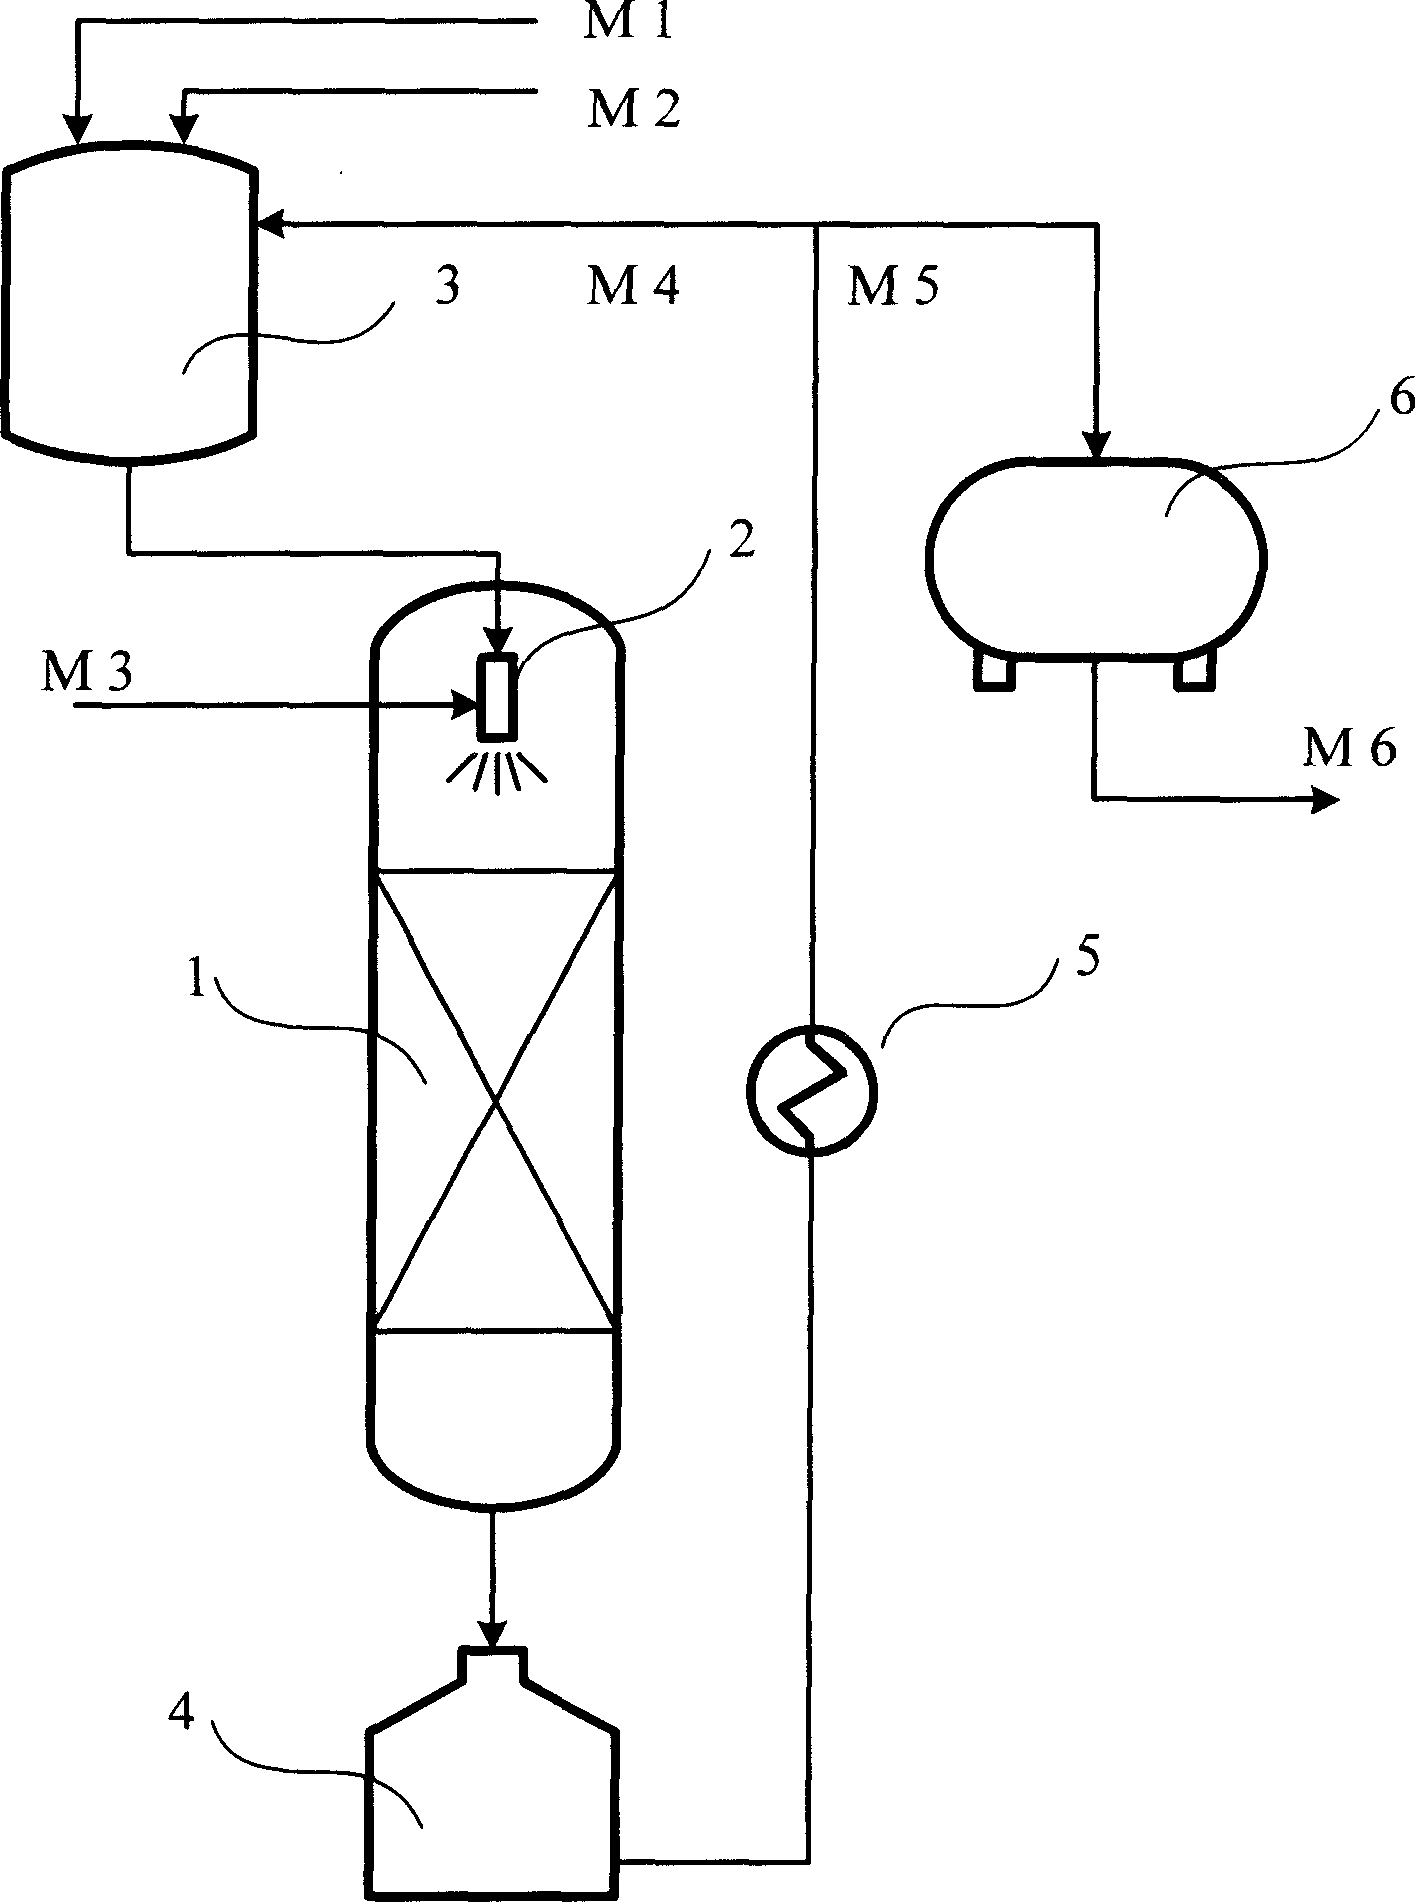 Method of preparing tetrahydrobicyclo pentadiene by continuous hydrogenation of bicyclopentadiene